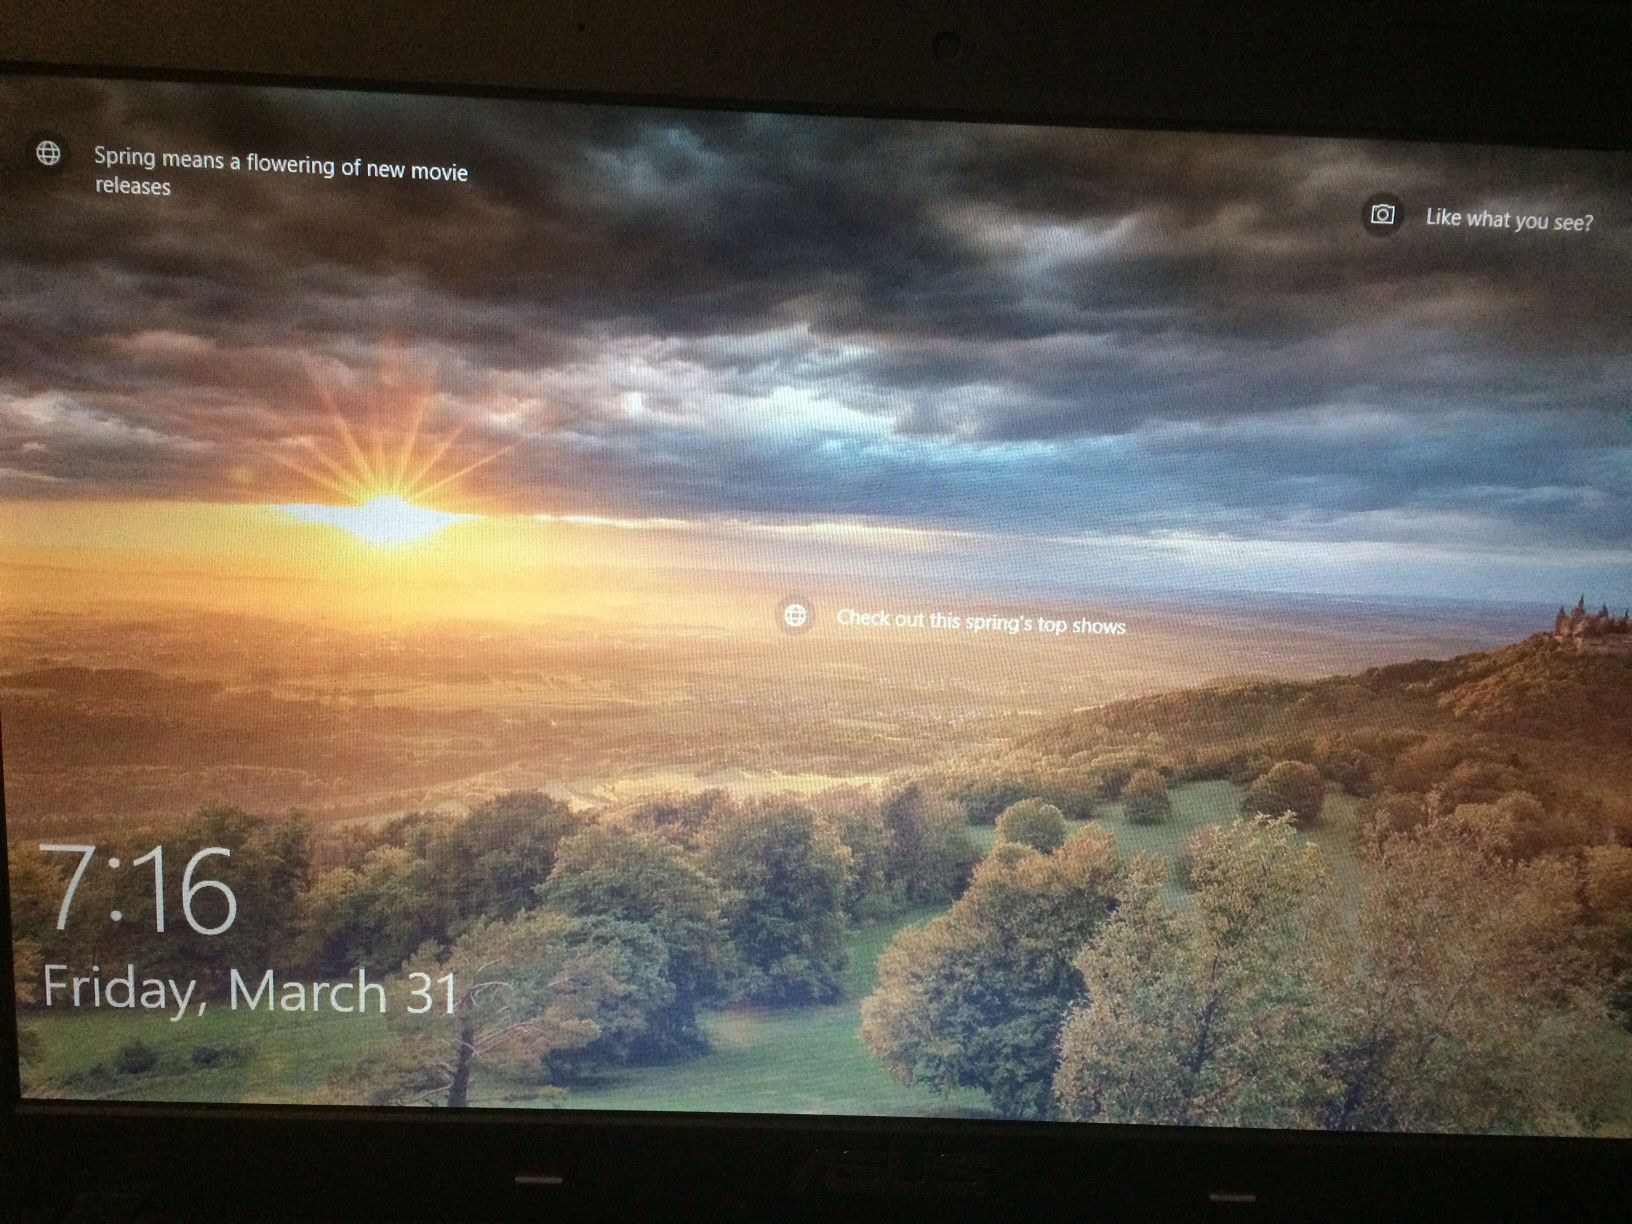 Windows 10 wallpaper background (Spring) Stack Exchange